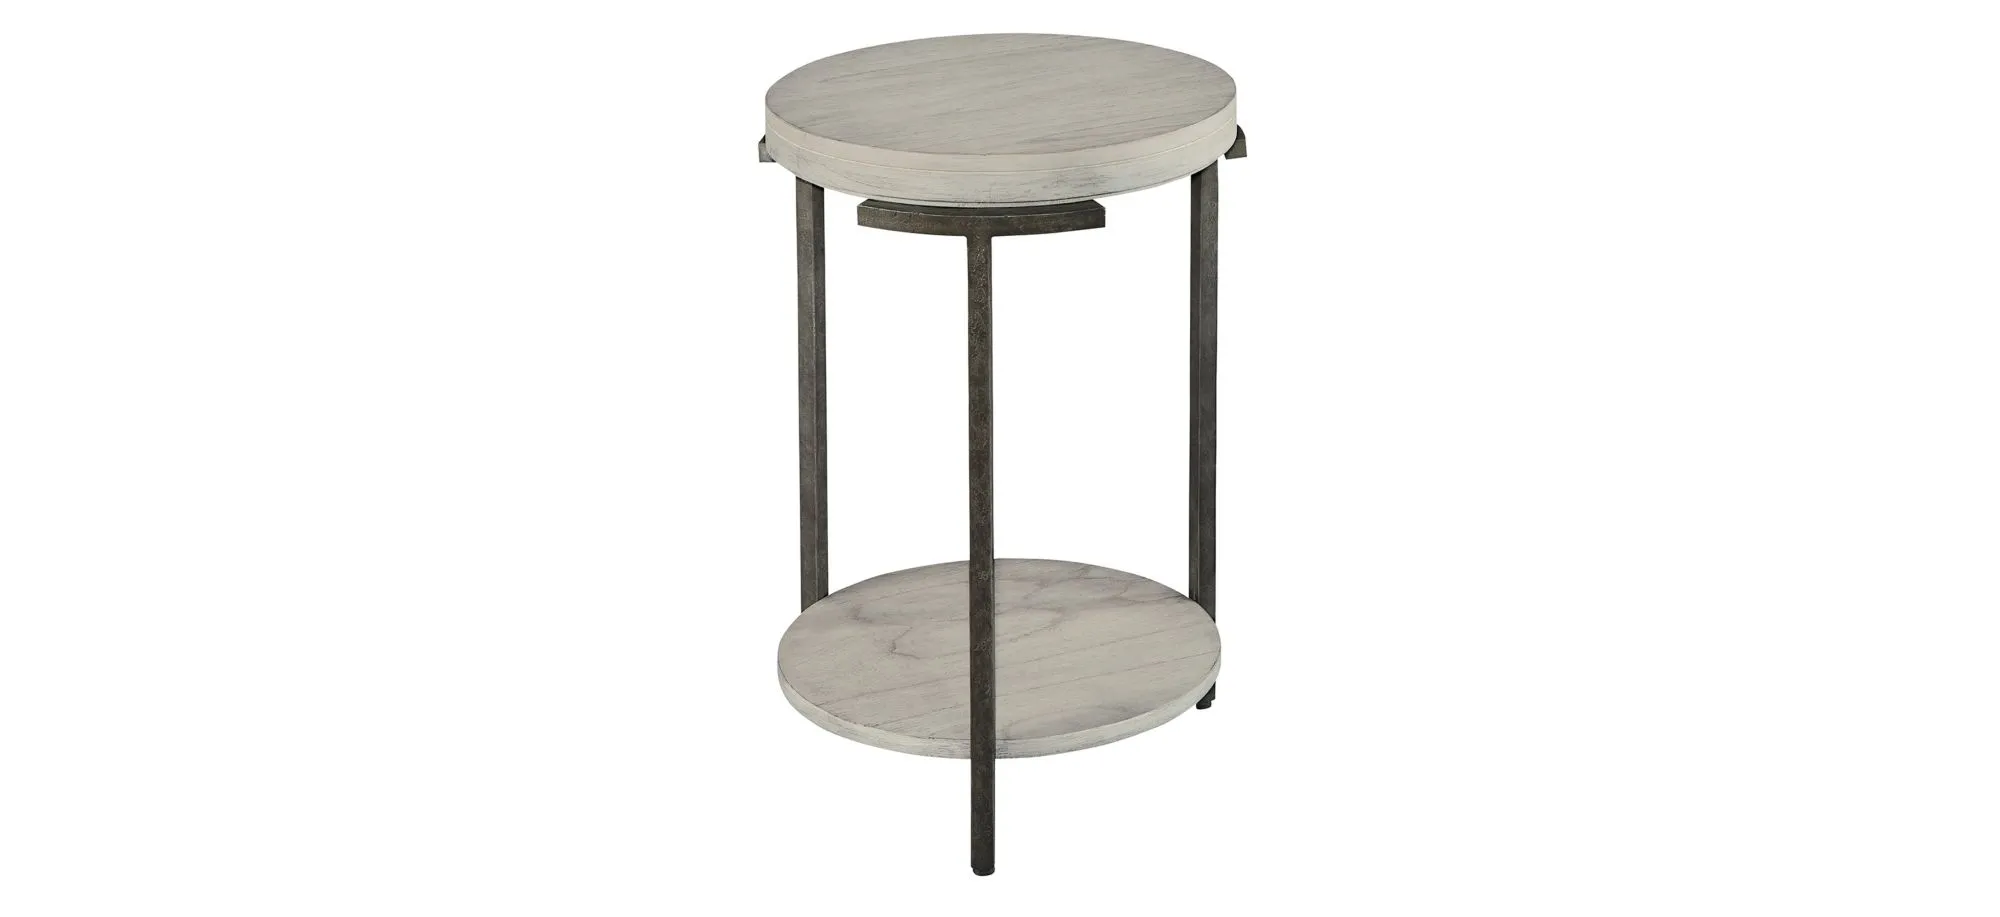 Sierra Heights End Table in SIERRA HEIGHTS by Hekman Furniture Company